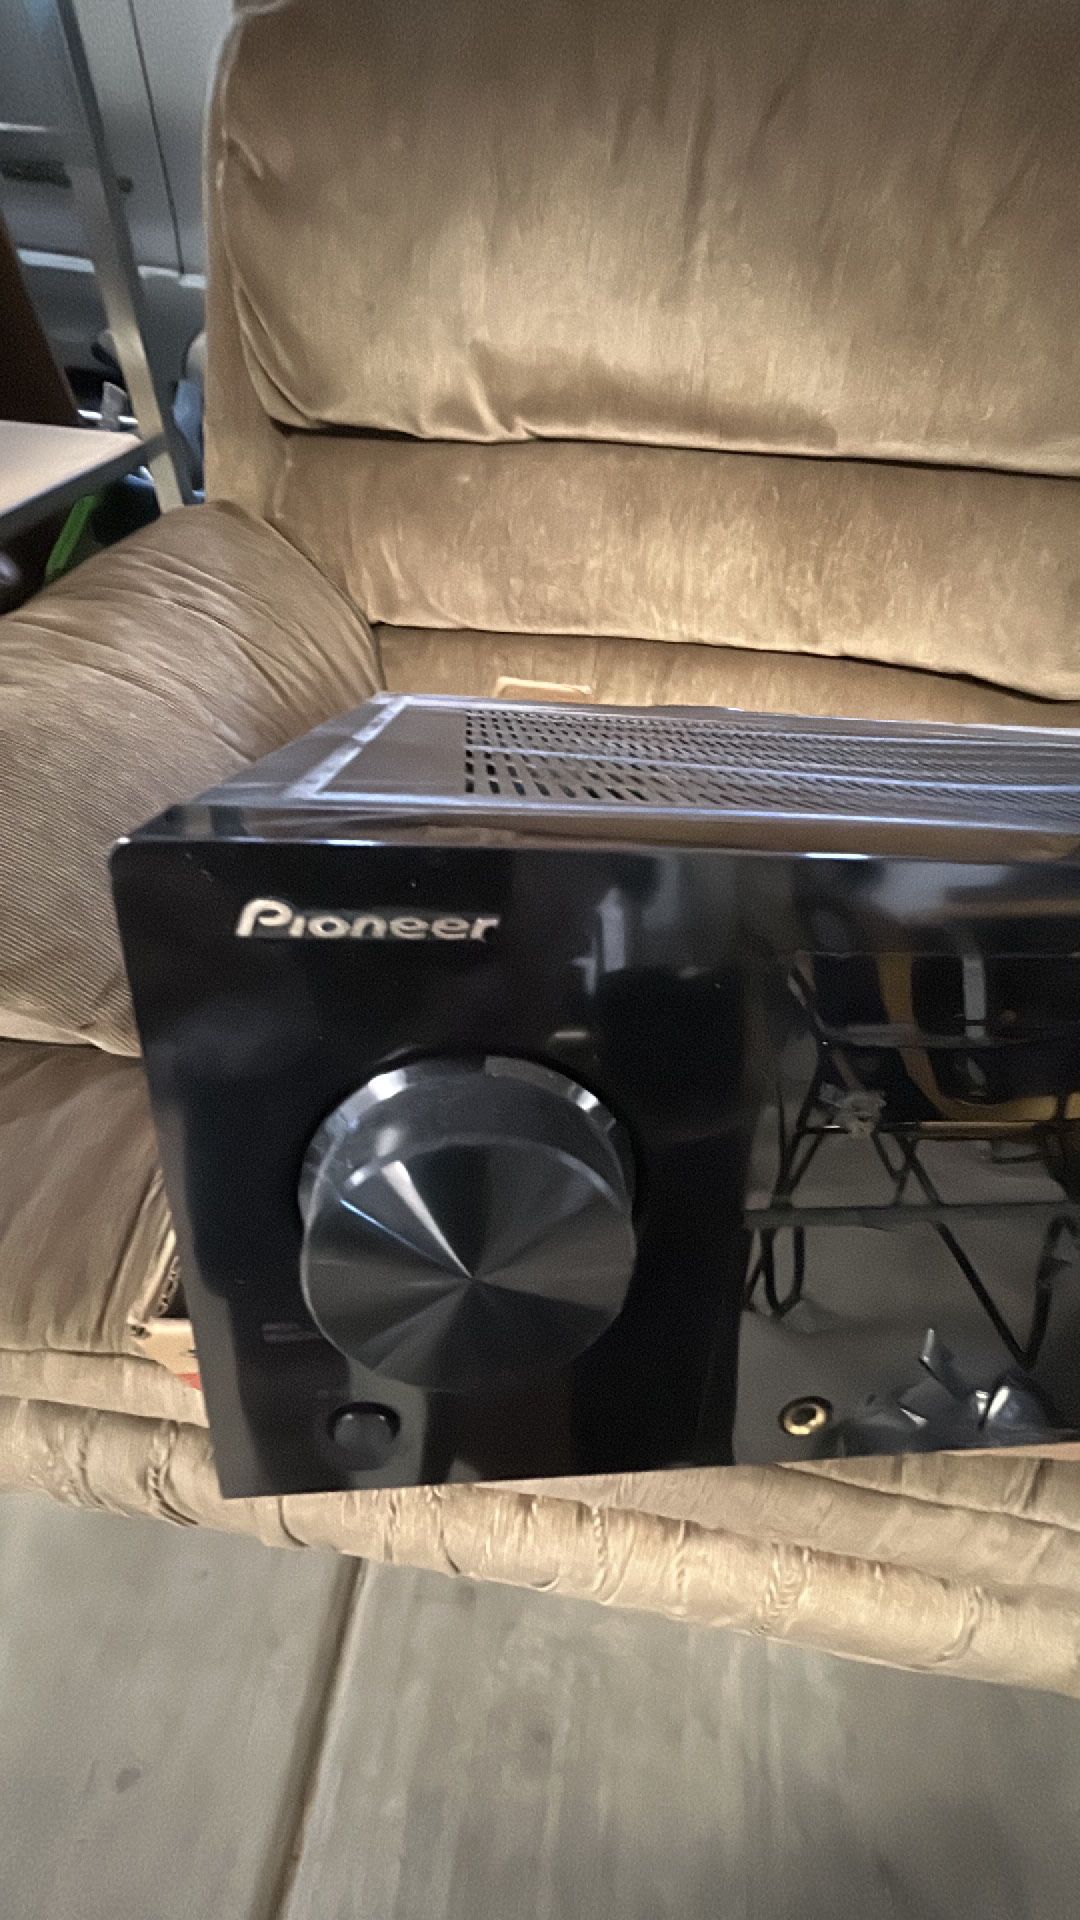 Pioneer receiver